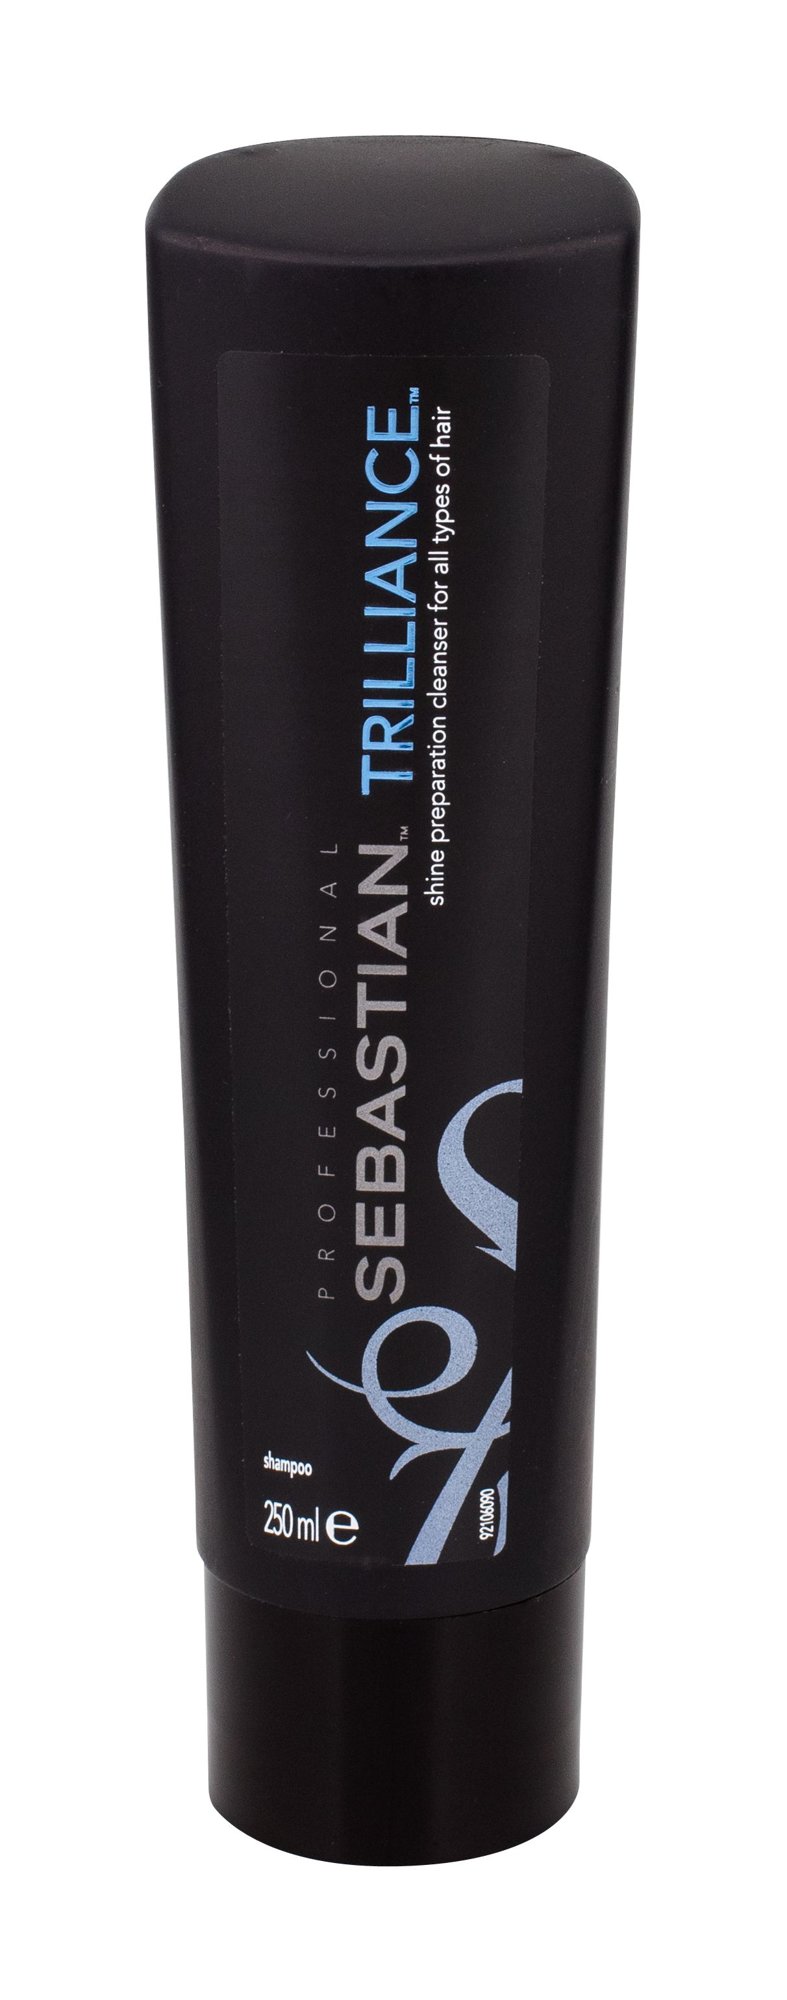 Sebastian Professional Trilliance 250ml šampūnas